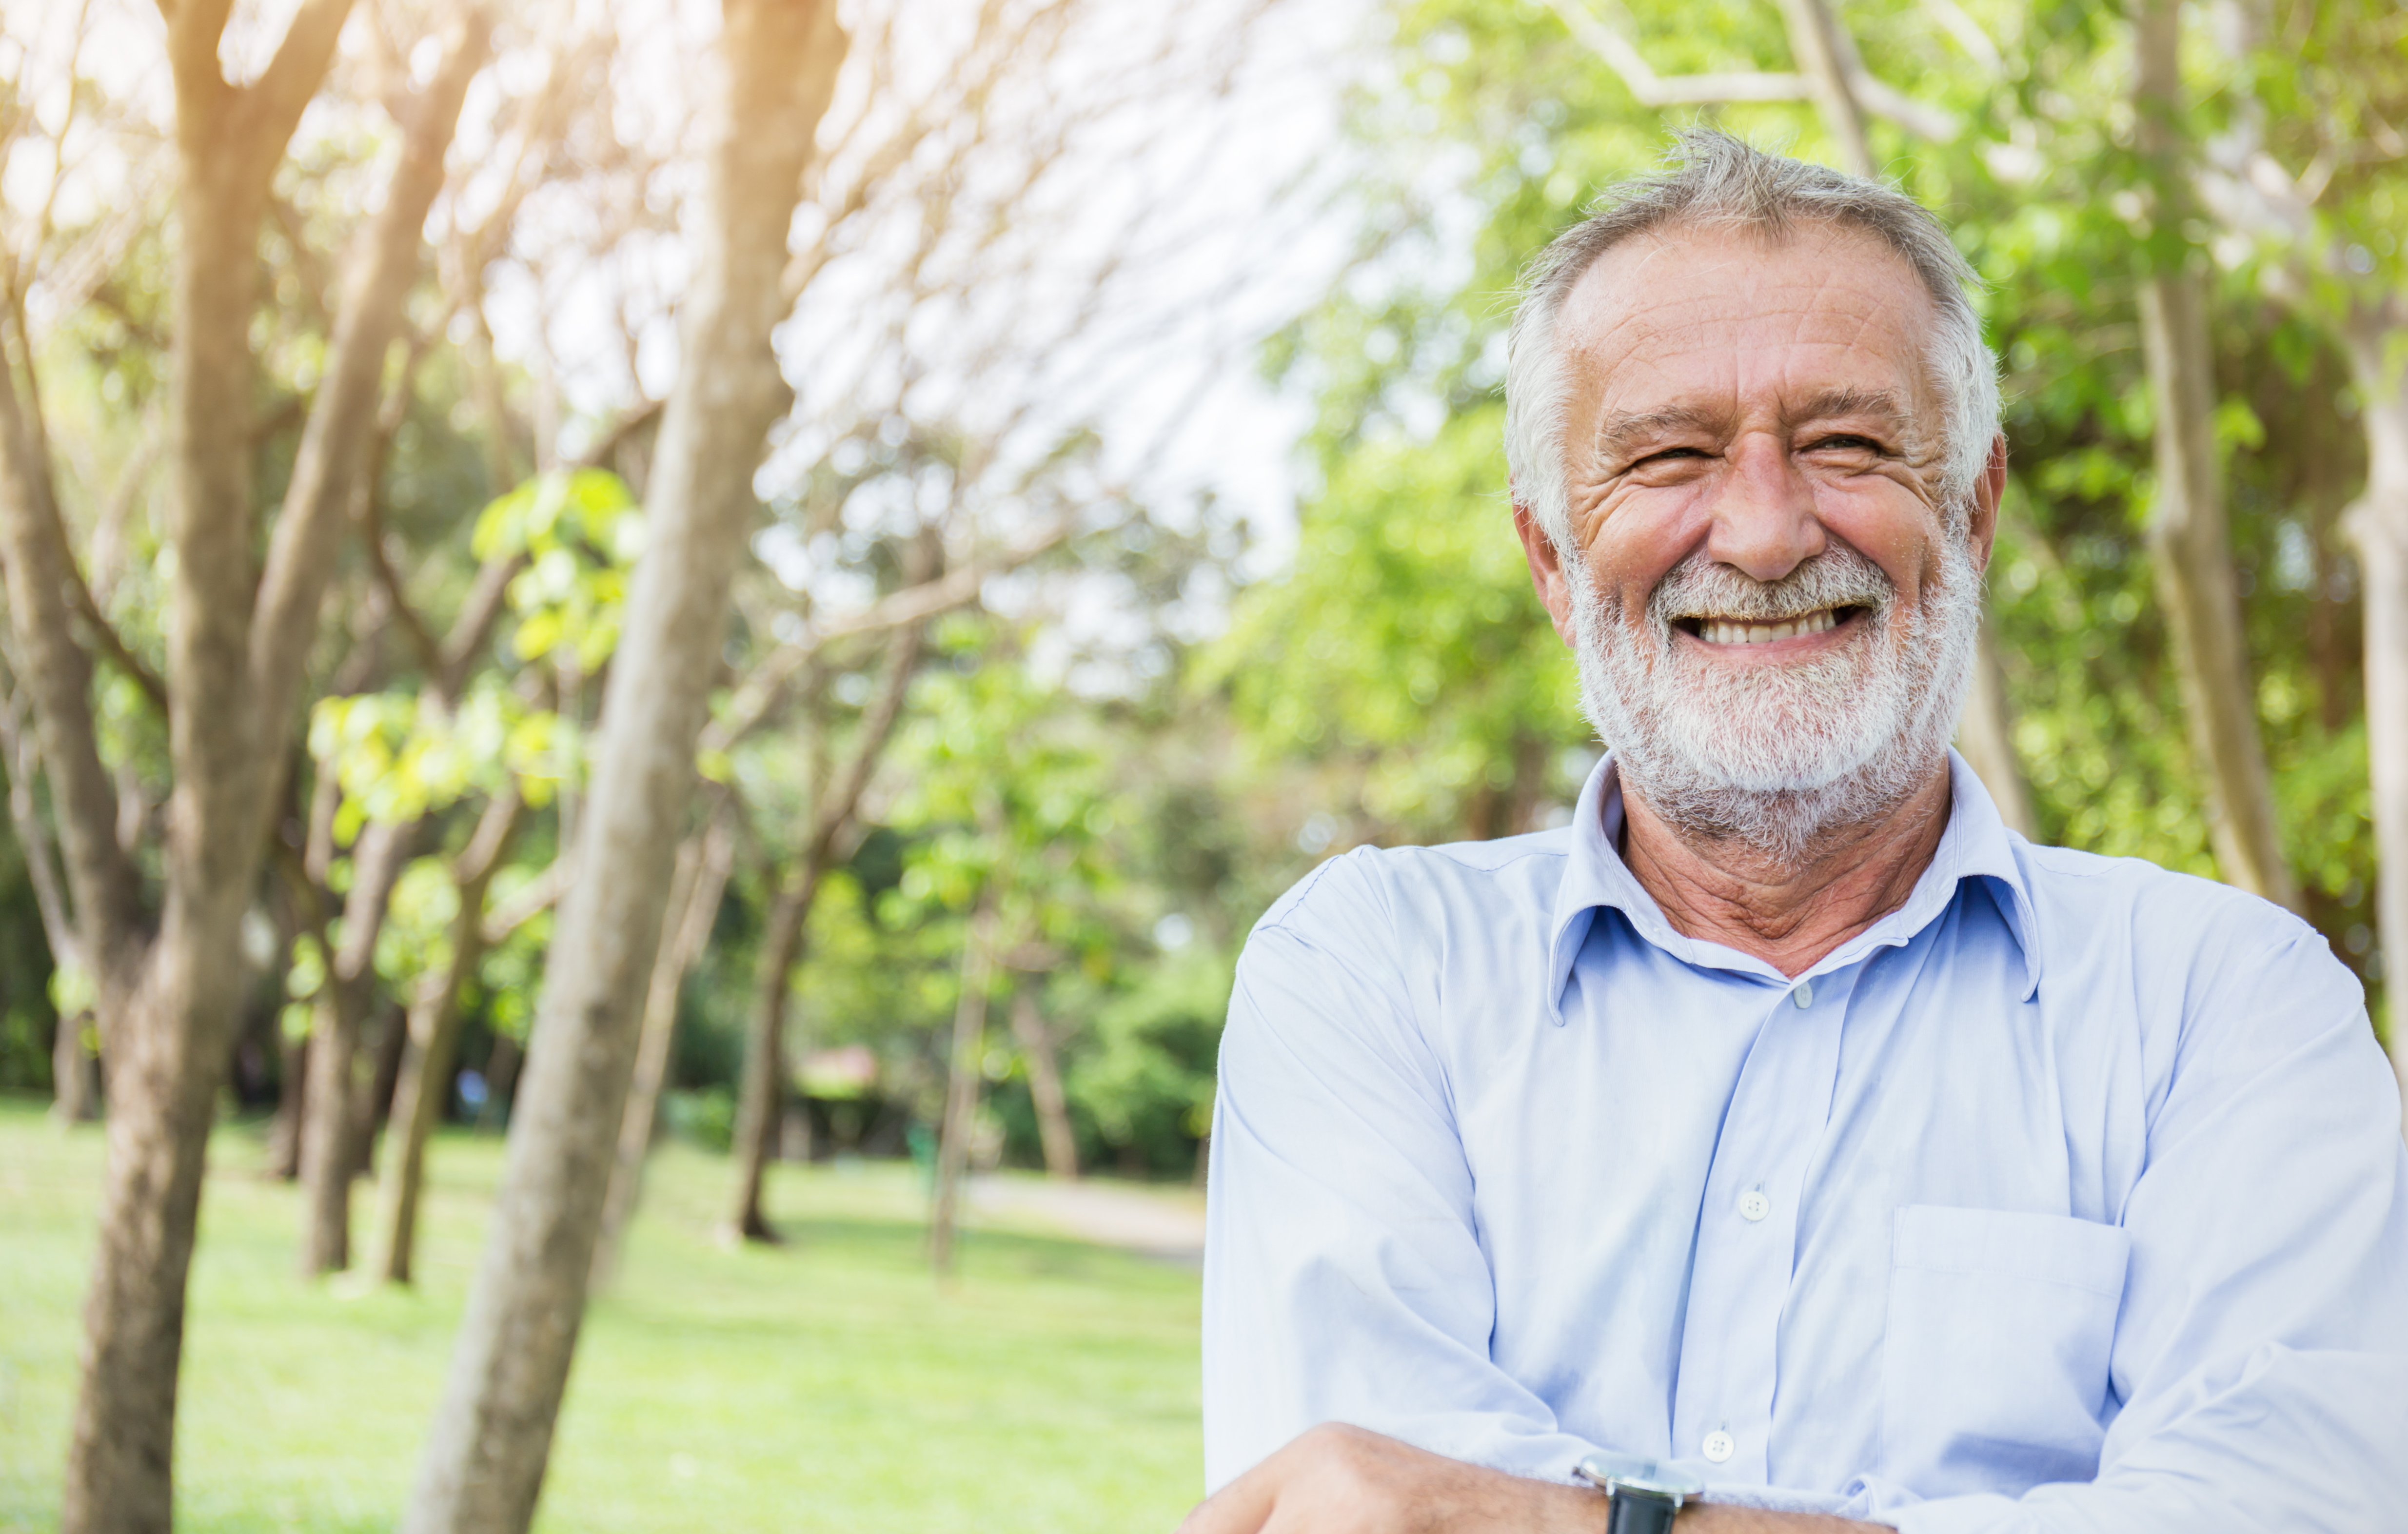 A smiling senior man | Source: Shutterstock